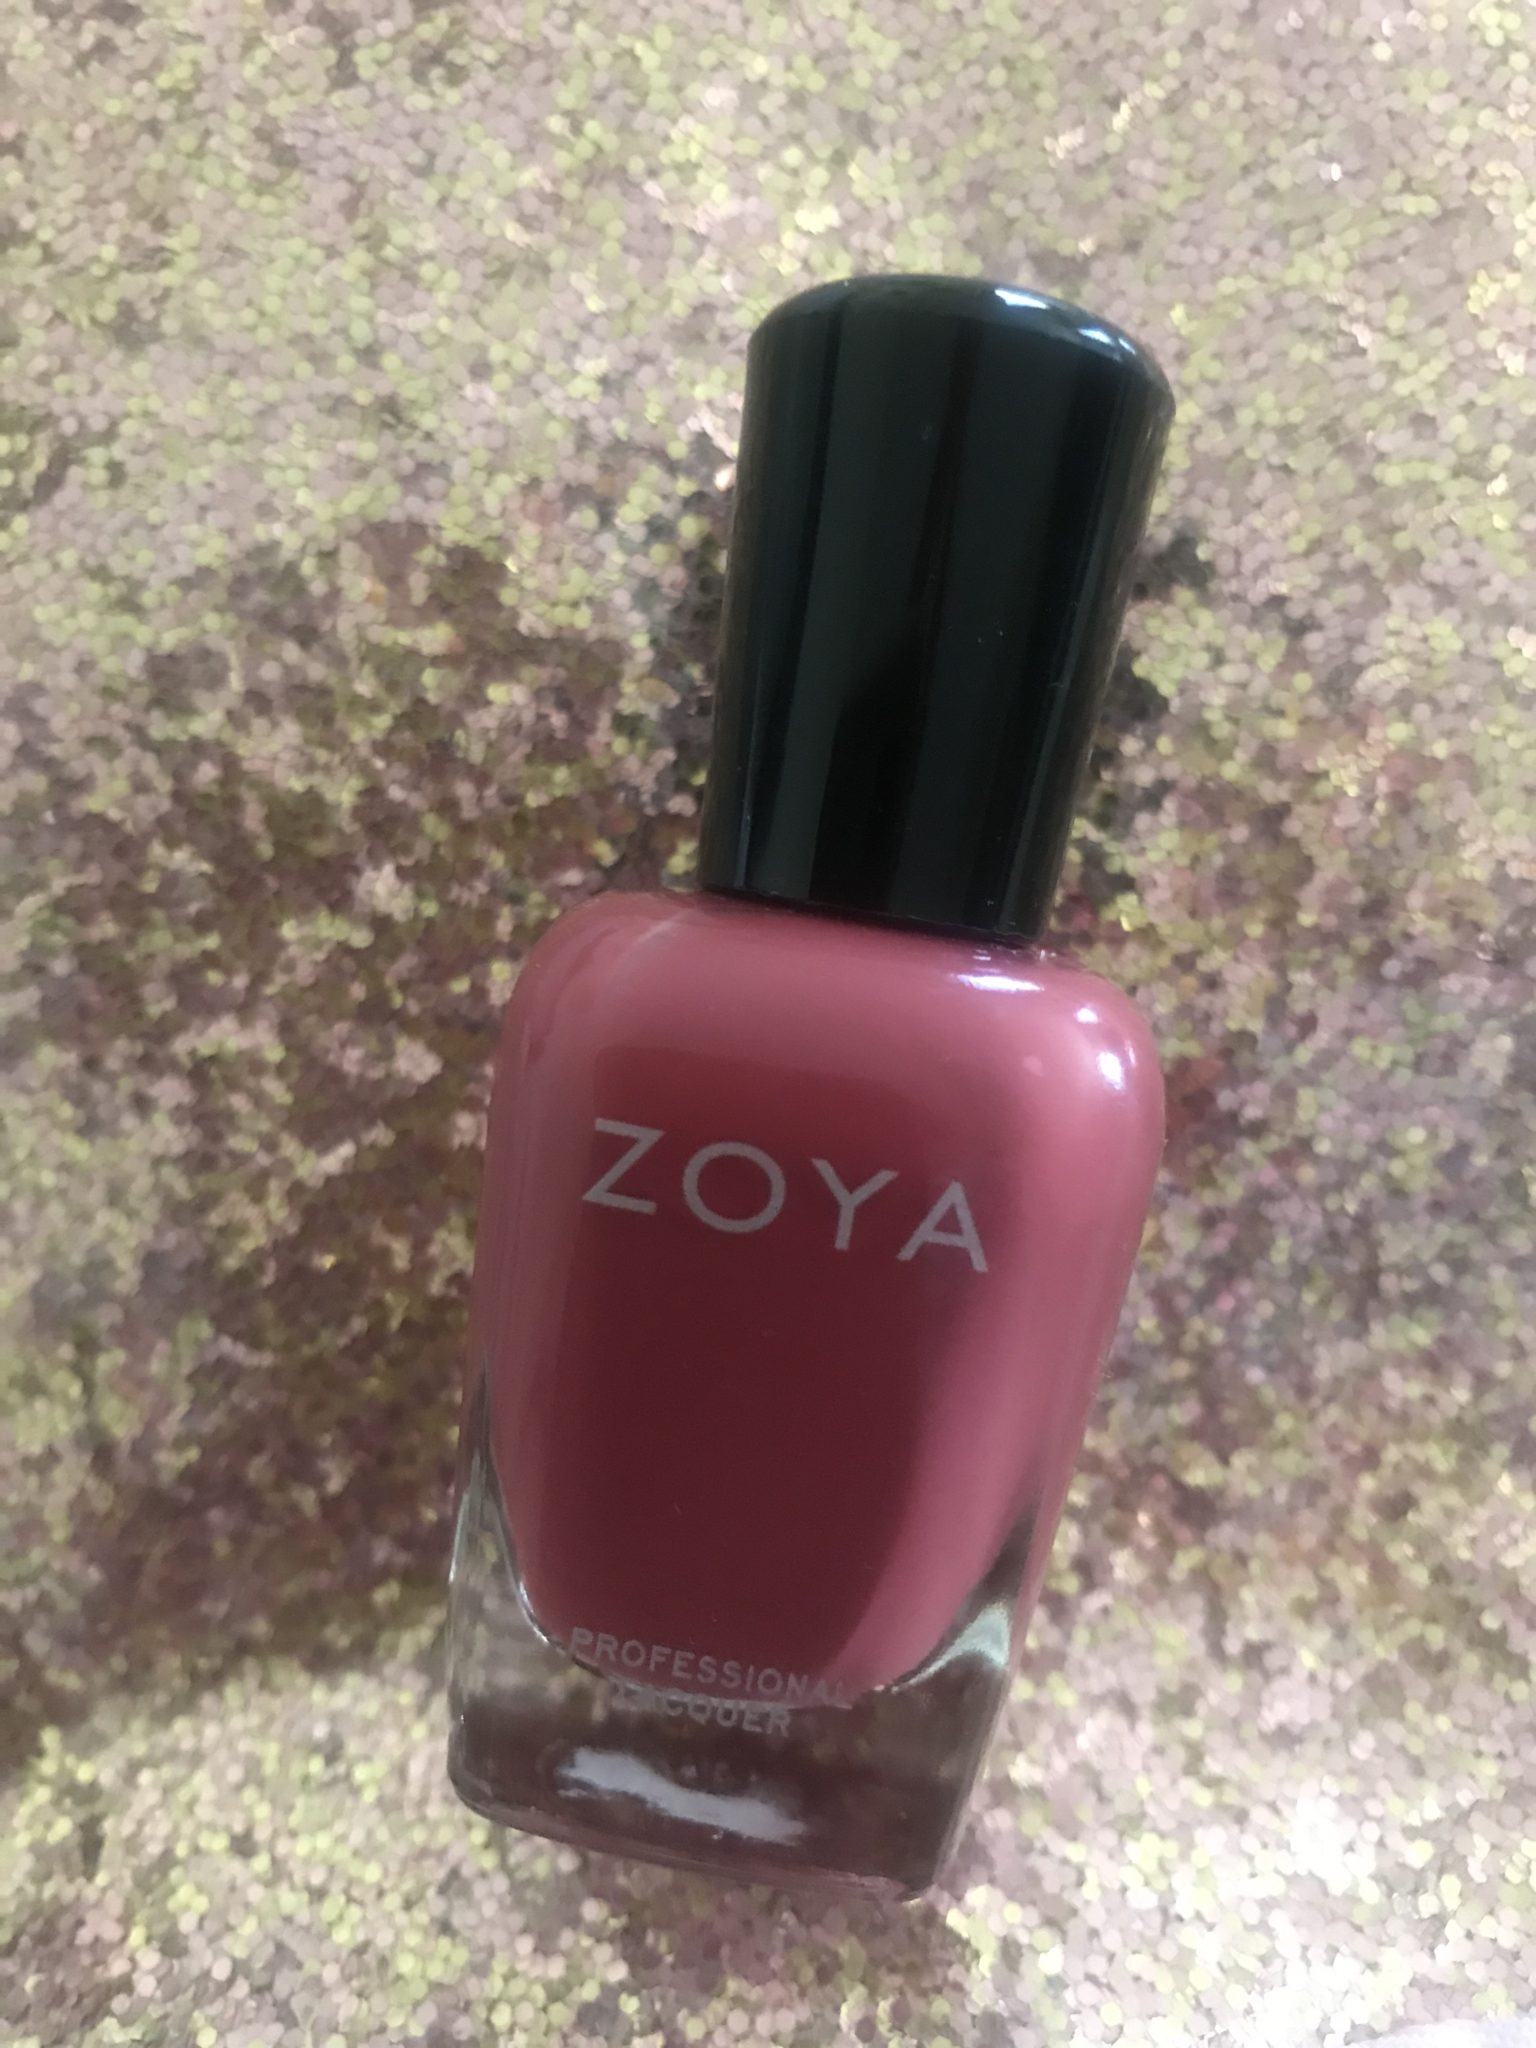 bottle of Zoya "Briar" nail polish, a red terra-cotta cream polish